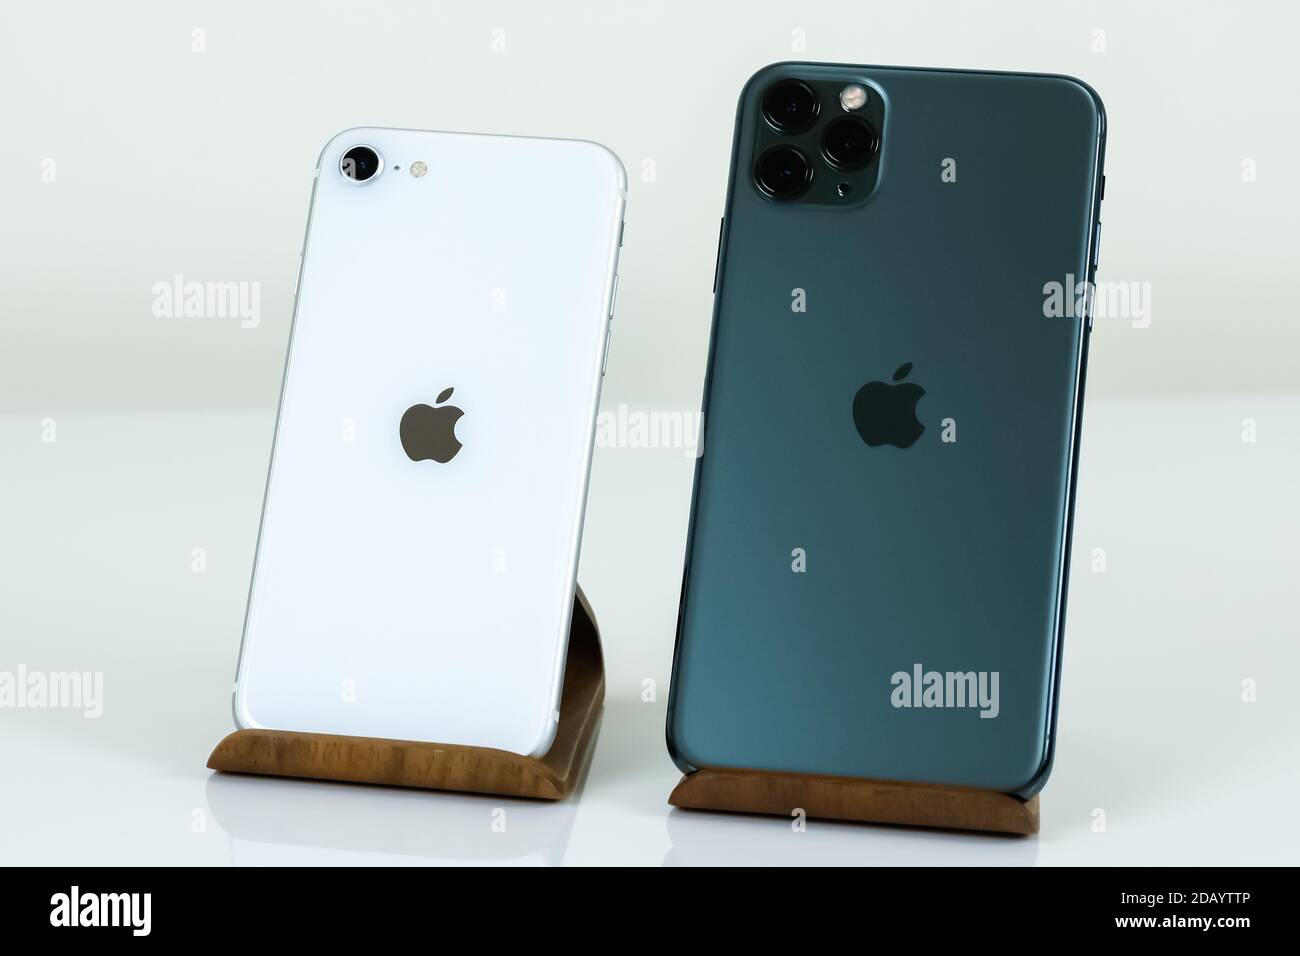 Iphone se 2 fotografías e imágenes de alta resolución - Alamy